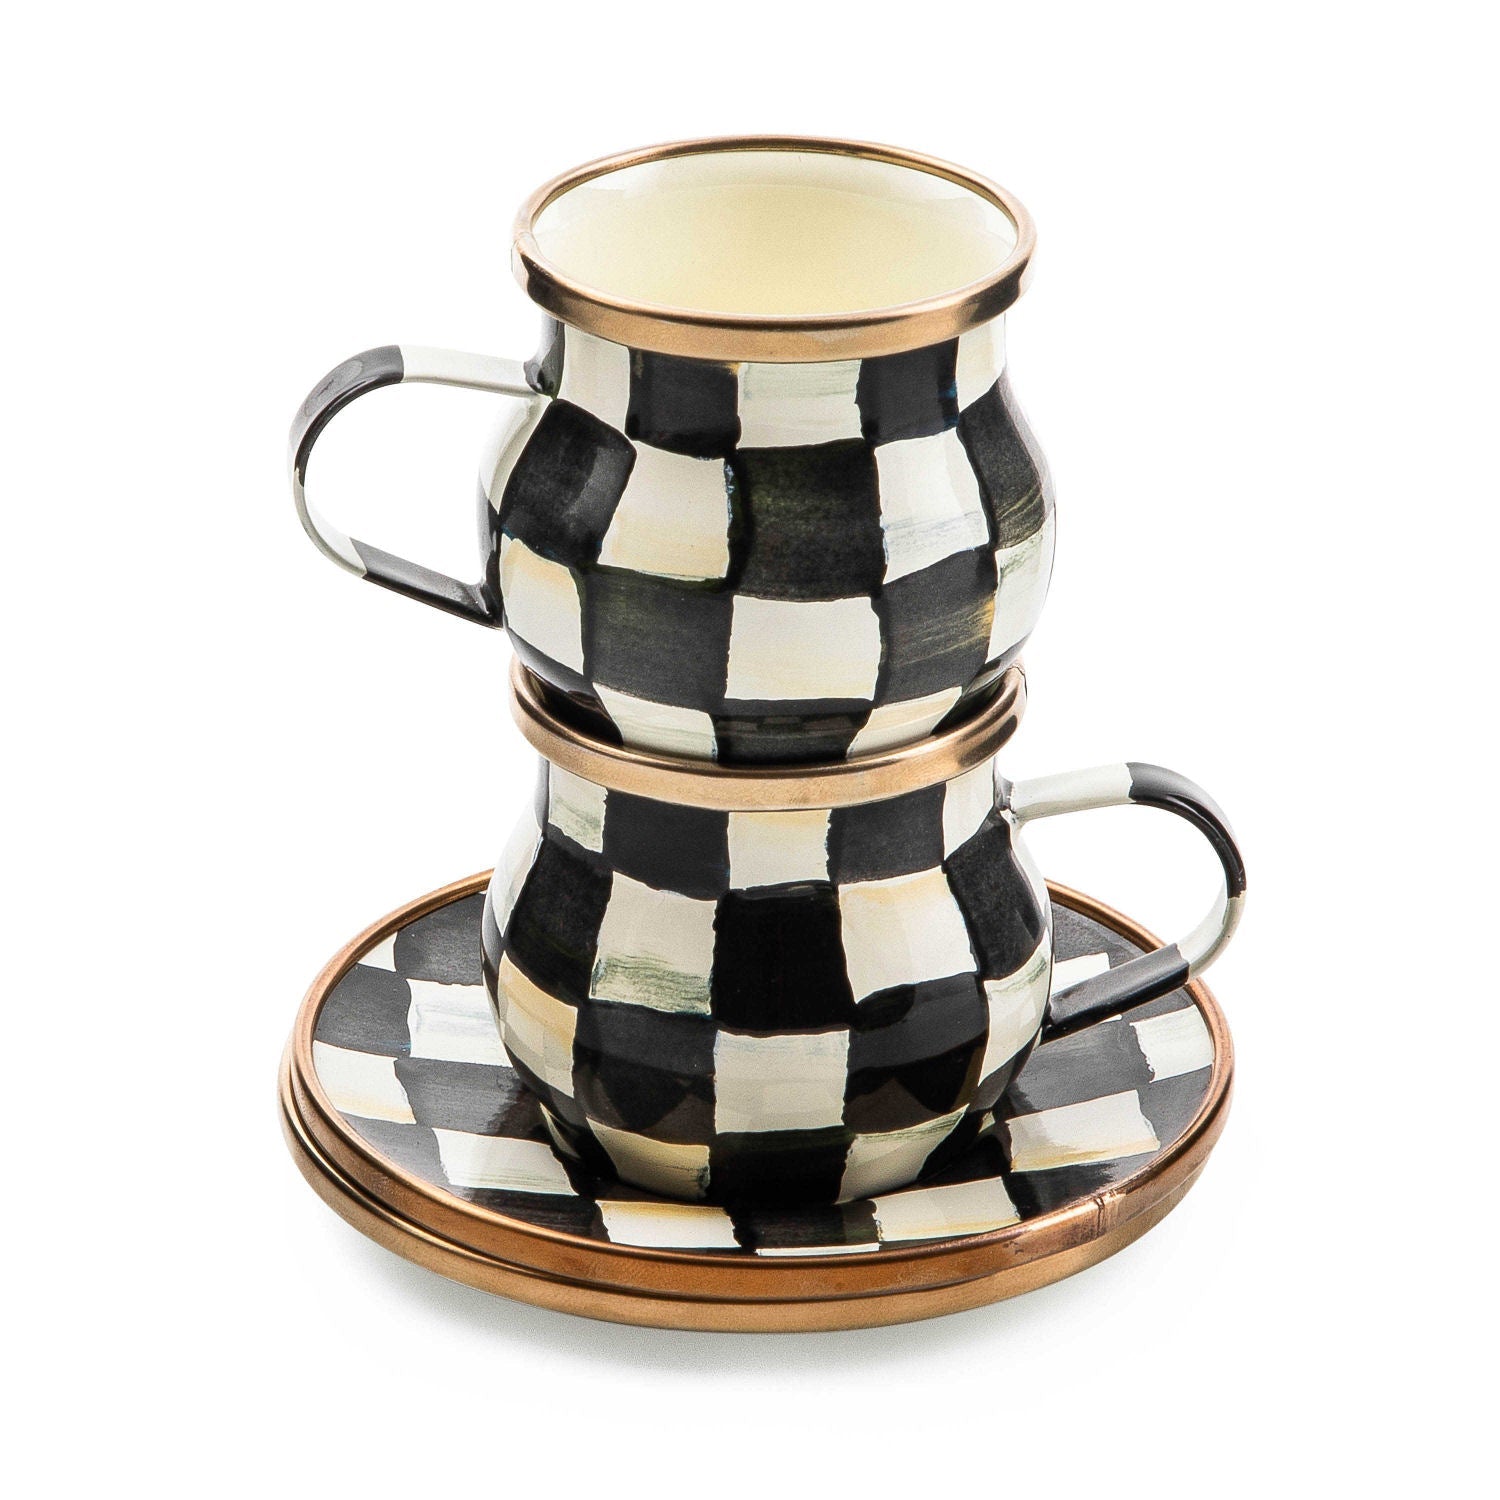 Courtly Check Enamel Espresso Cup & Saucer Set - |VESIMI Design|